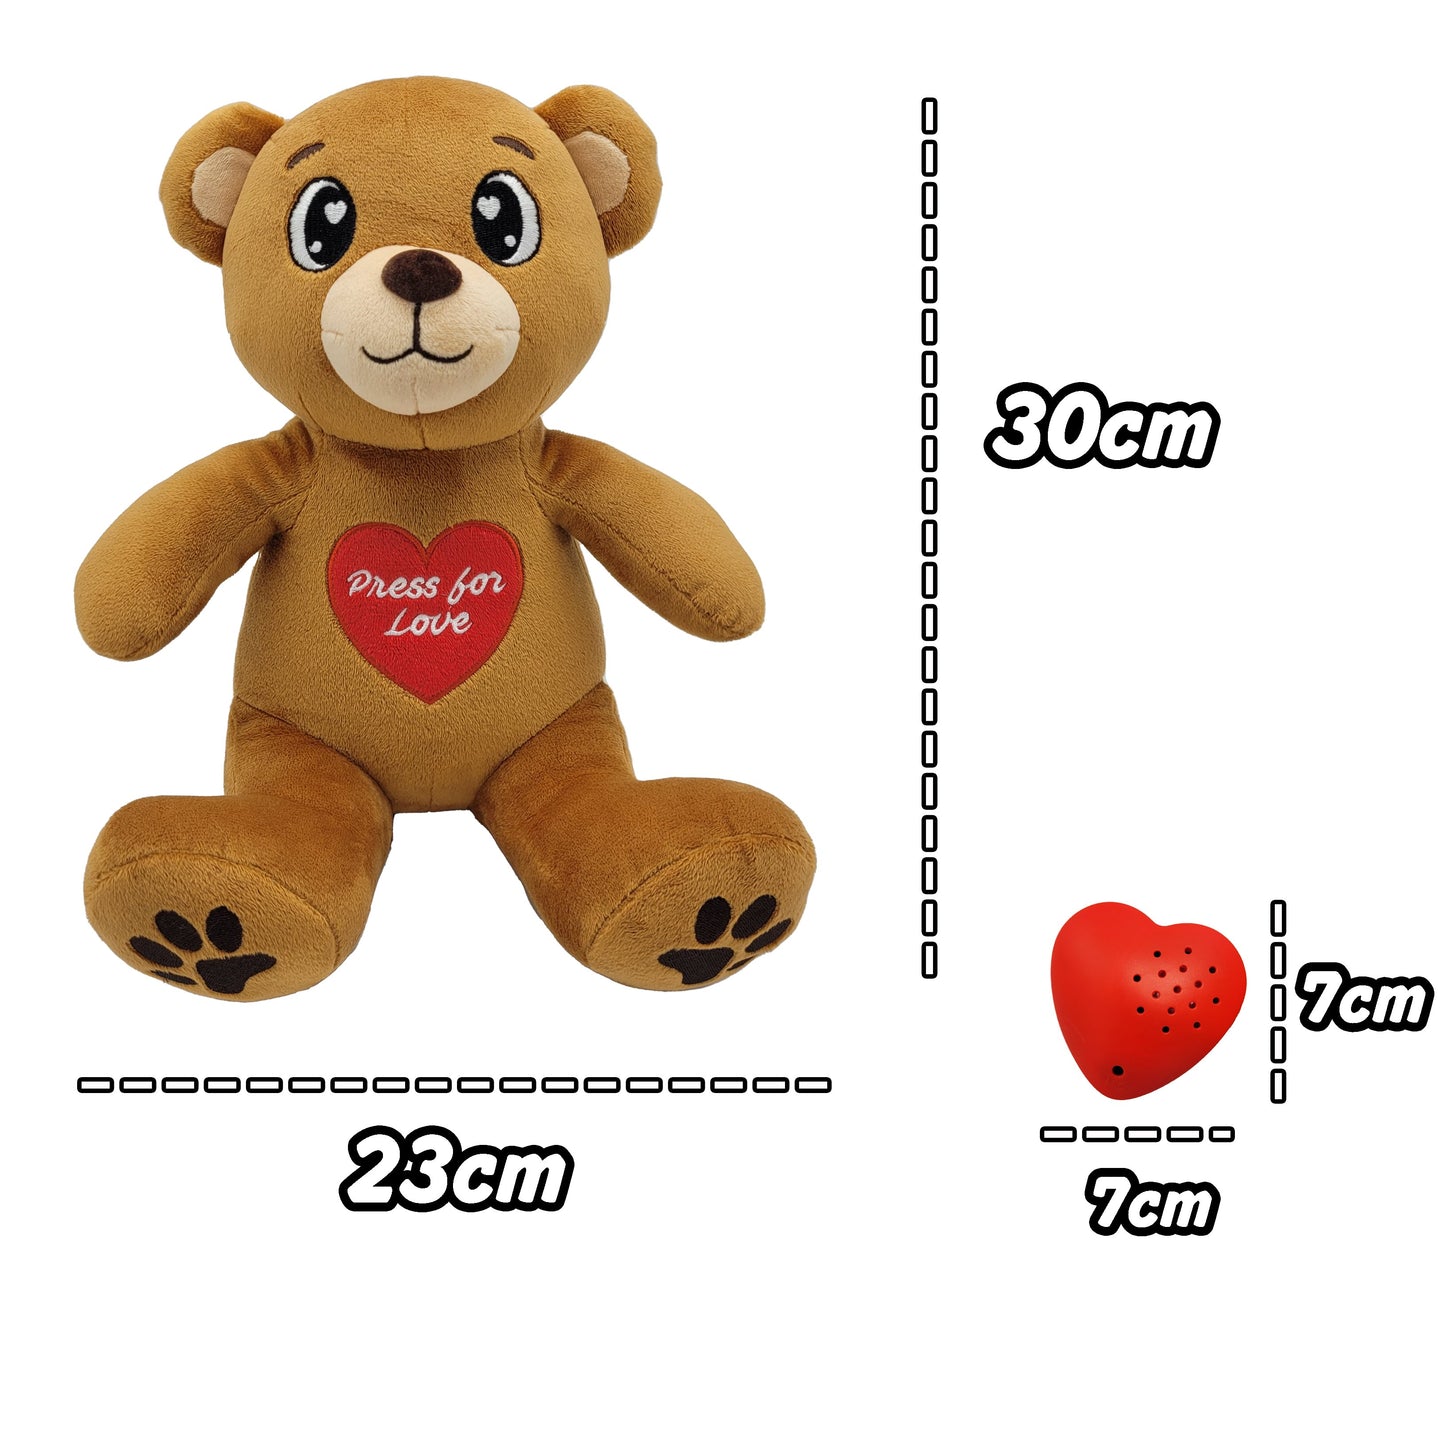 Teddy Bear - Teddy Bear With Personalized Message - 30cm